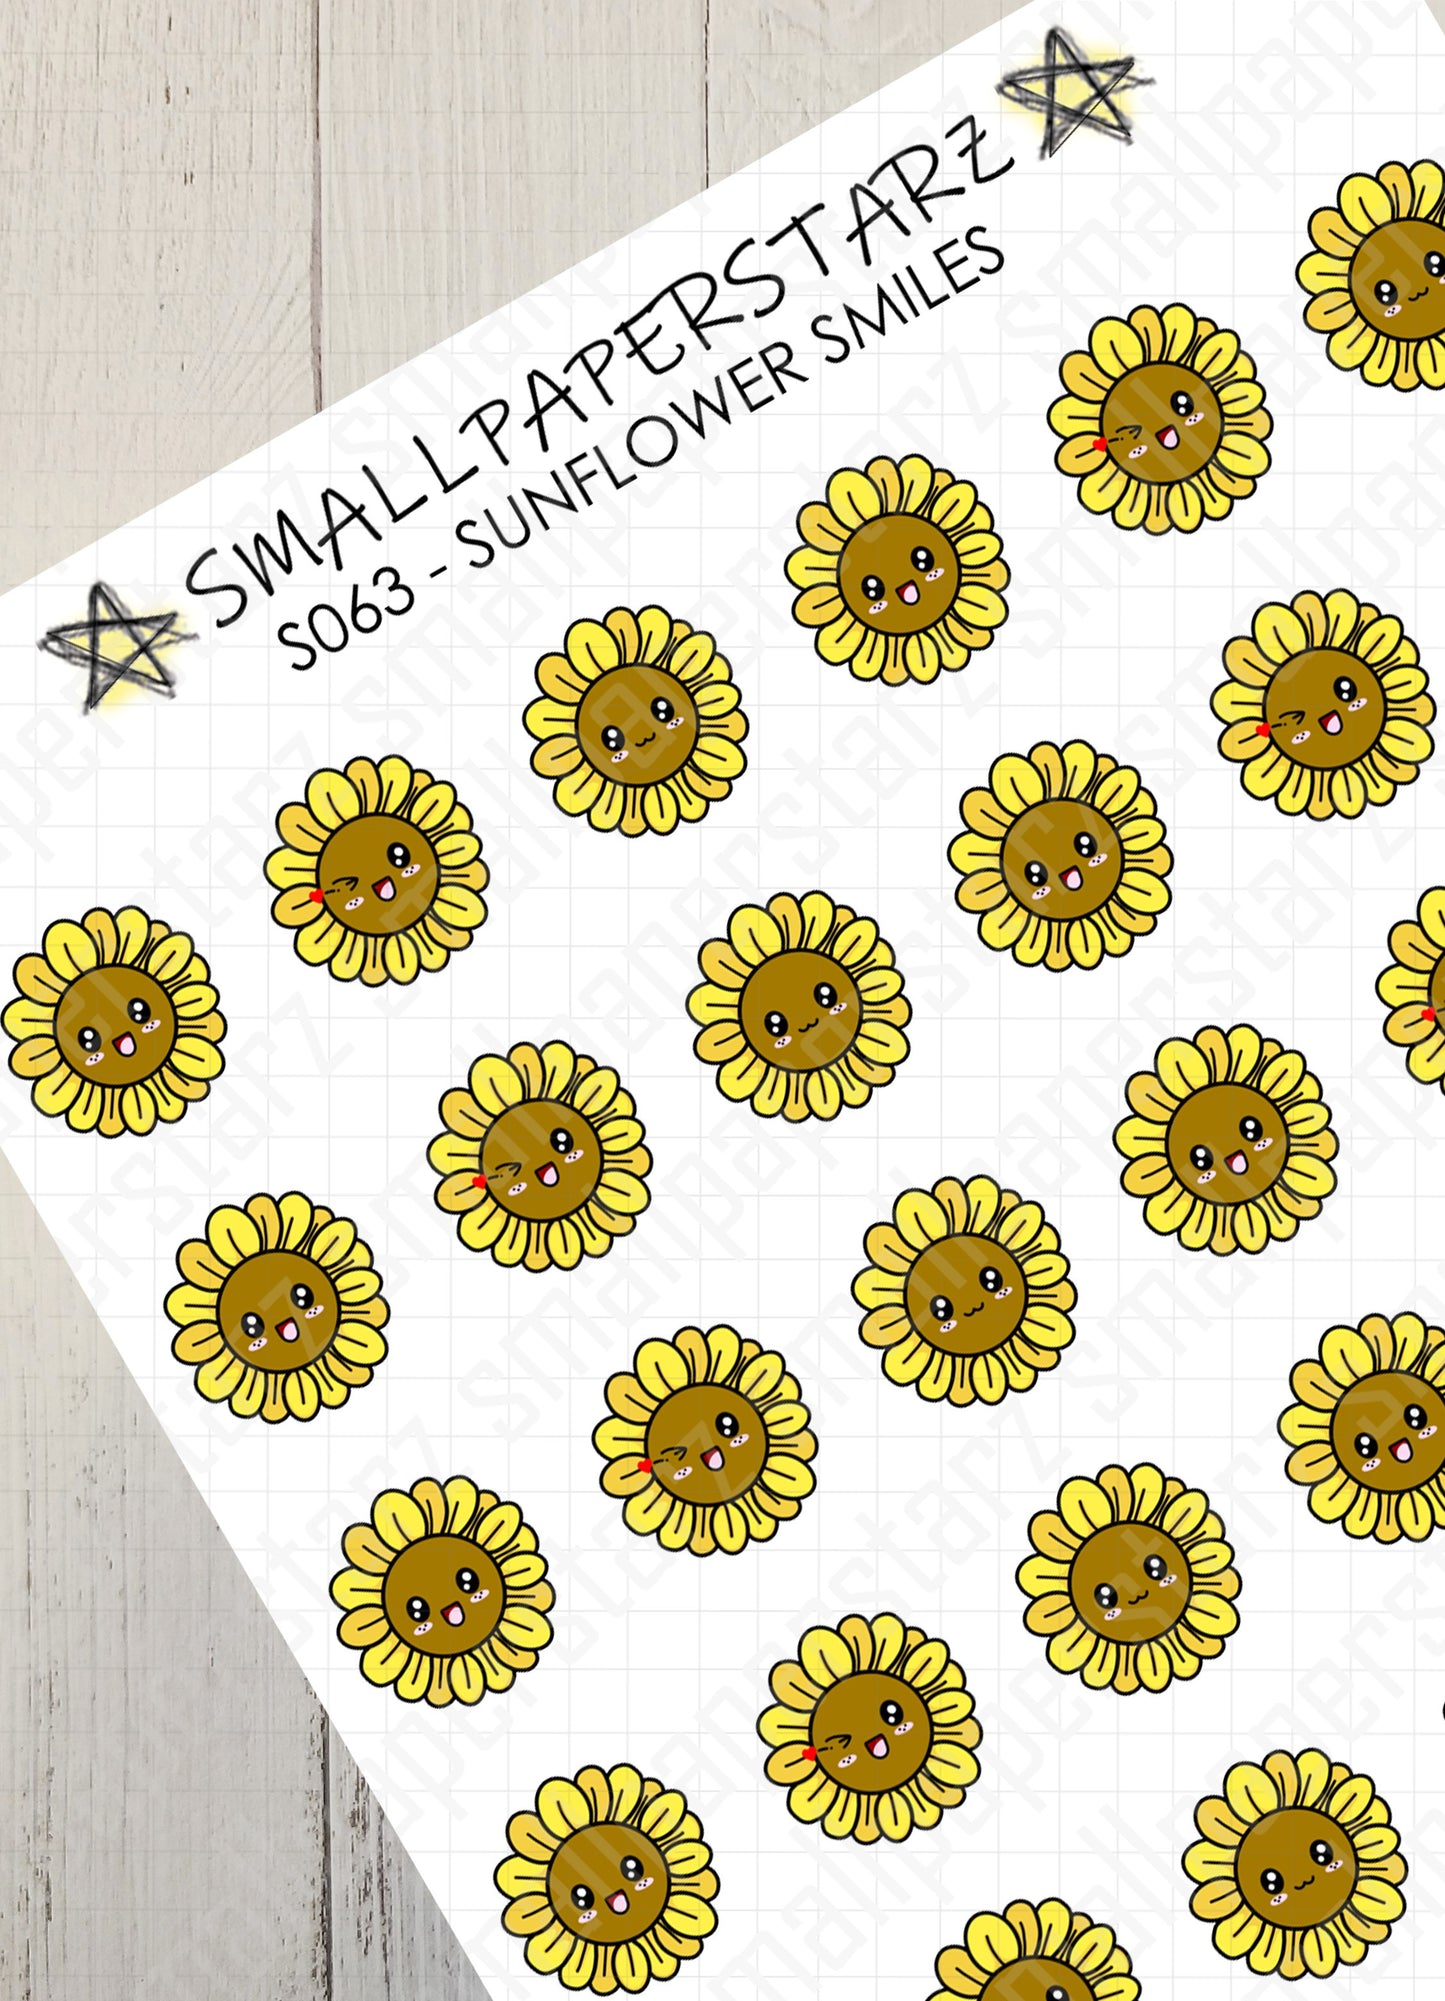 S063 - Sunflower Smiles Sticker Sheet